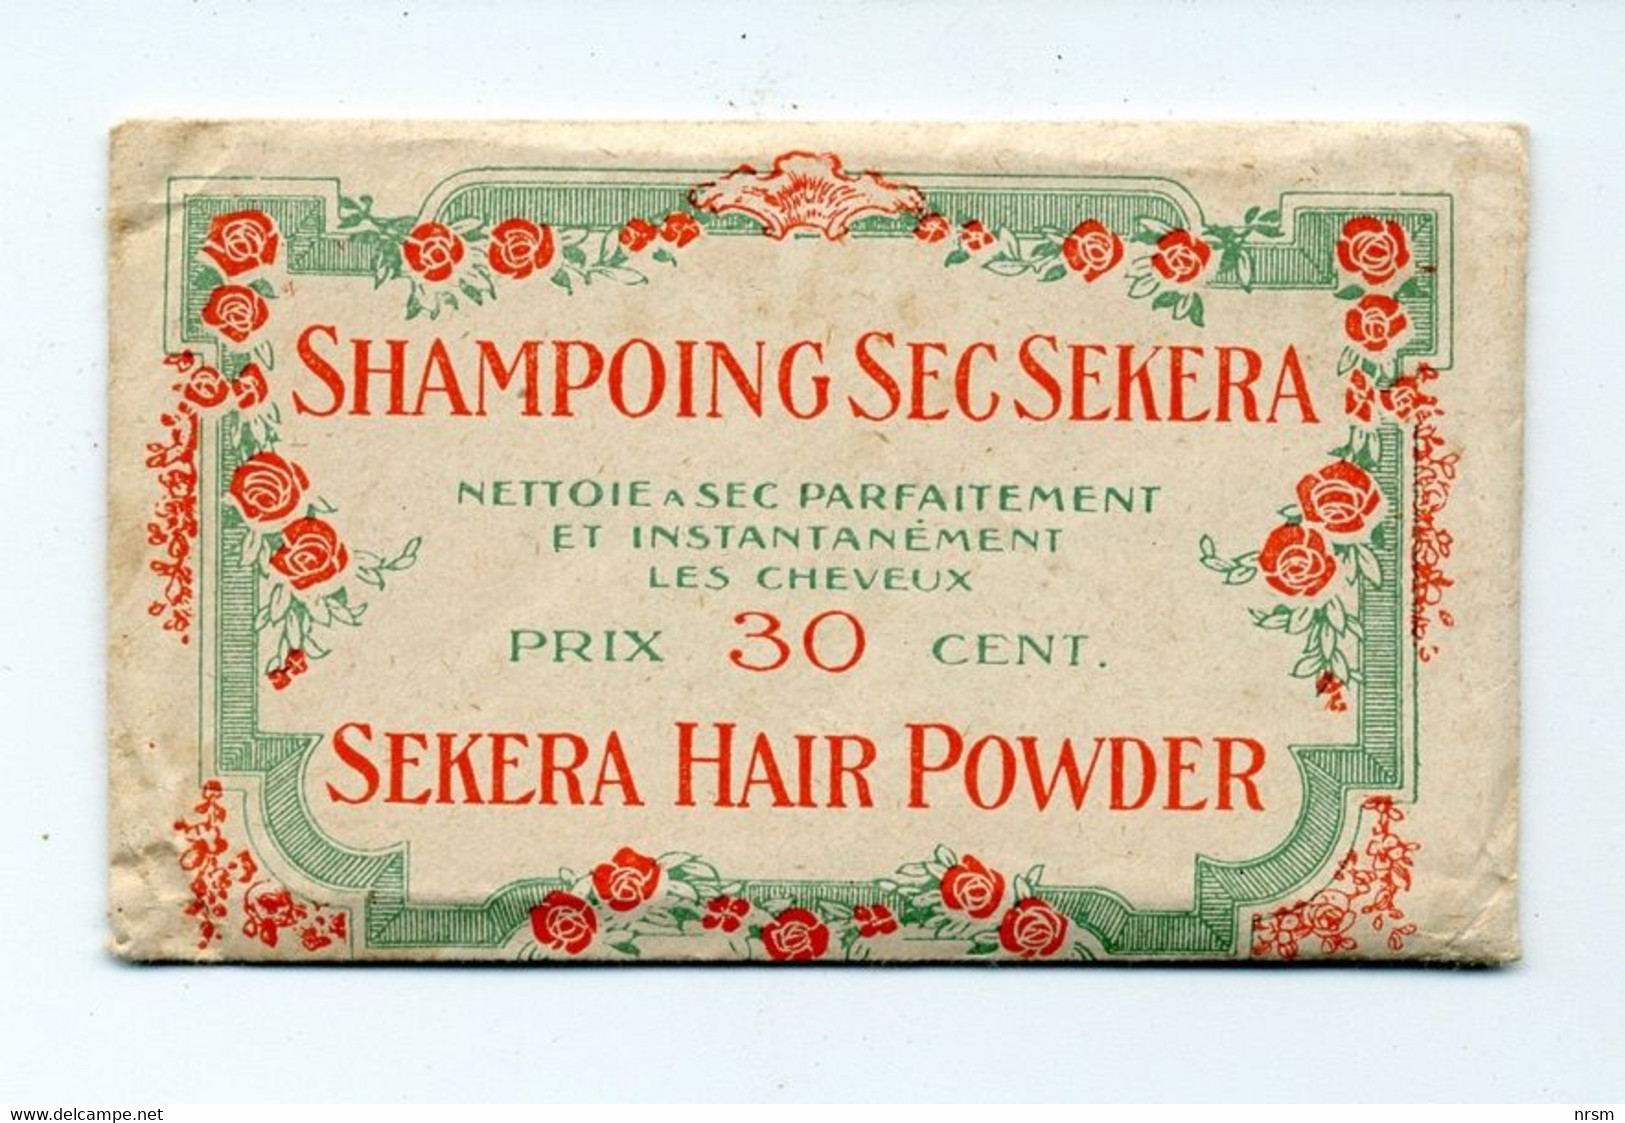 Shampoing Sec SEKERA / Ancien Sachet De Shampoing En Poudre / Sekera Hair Powder - Beauty Products